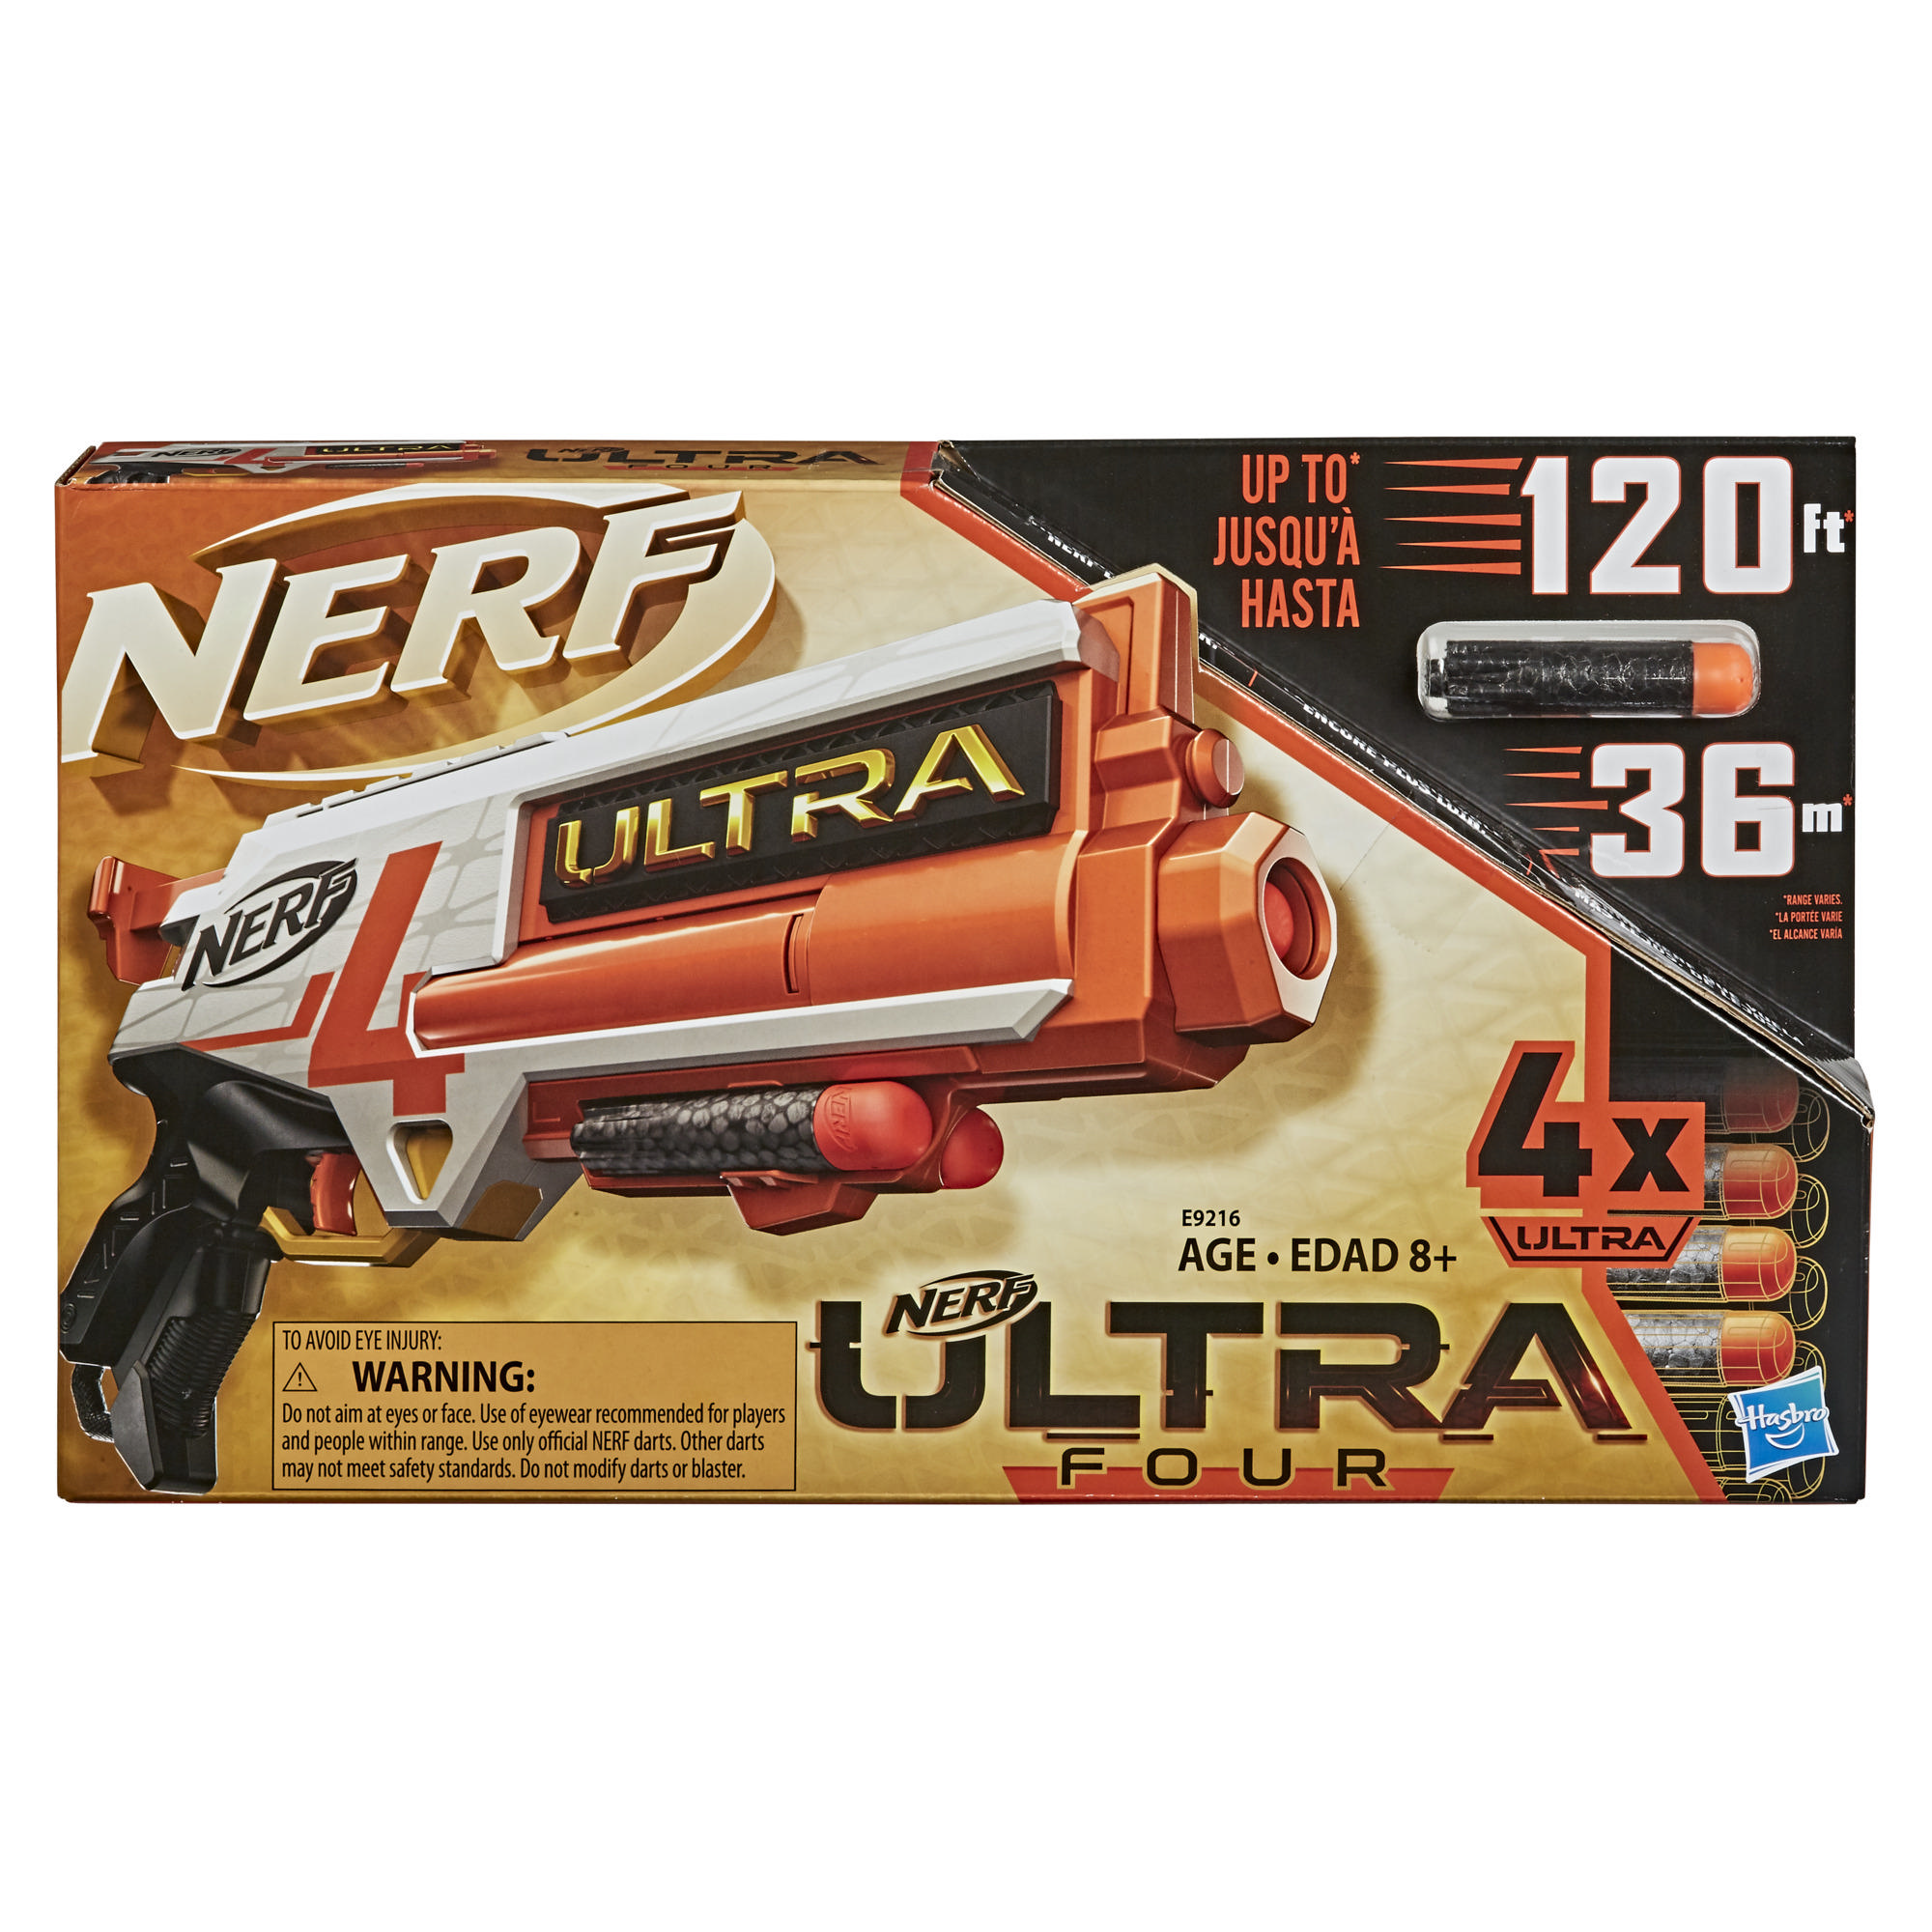 NERF Ultra Four Blaster @ Target B&M YMMV $4.78